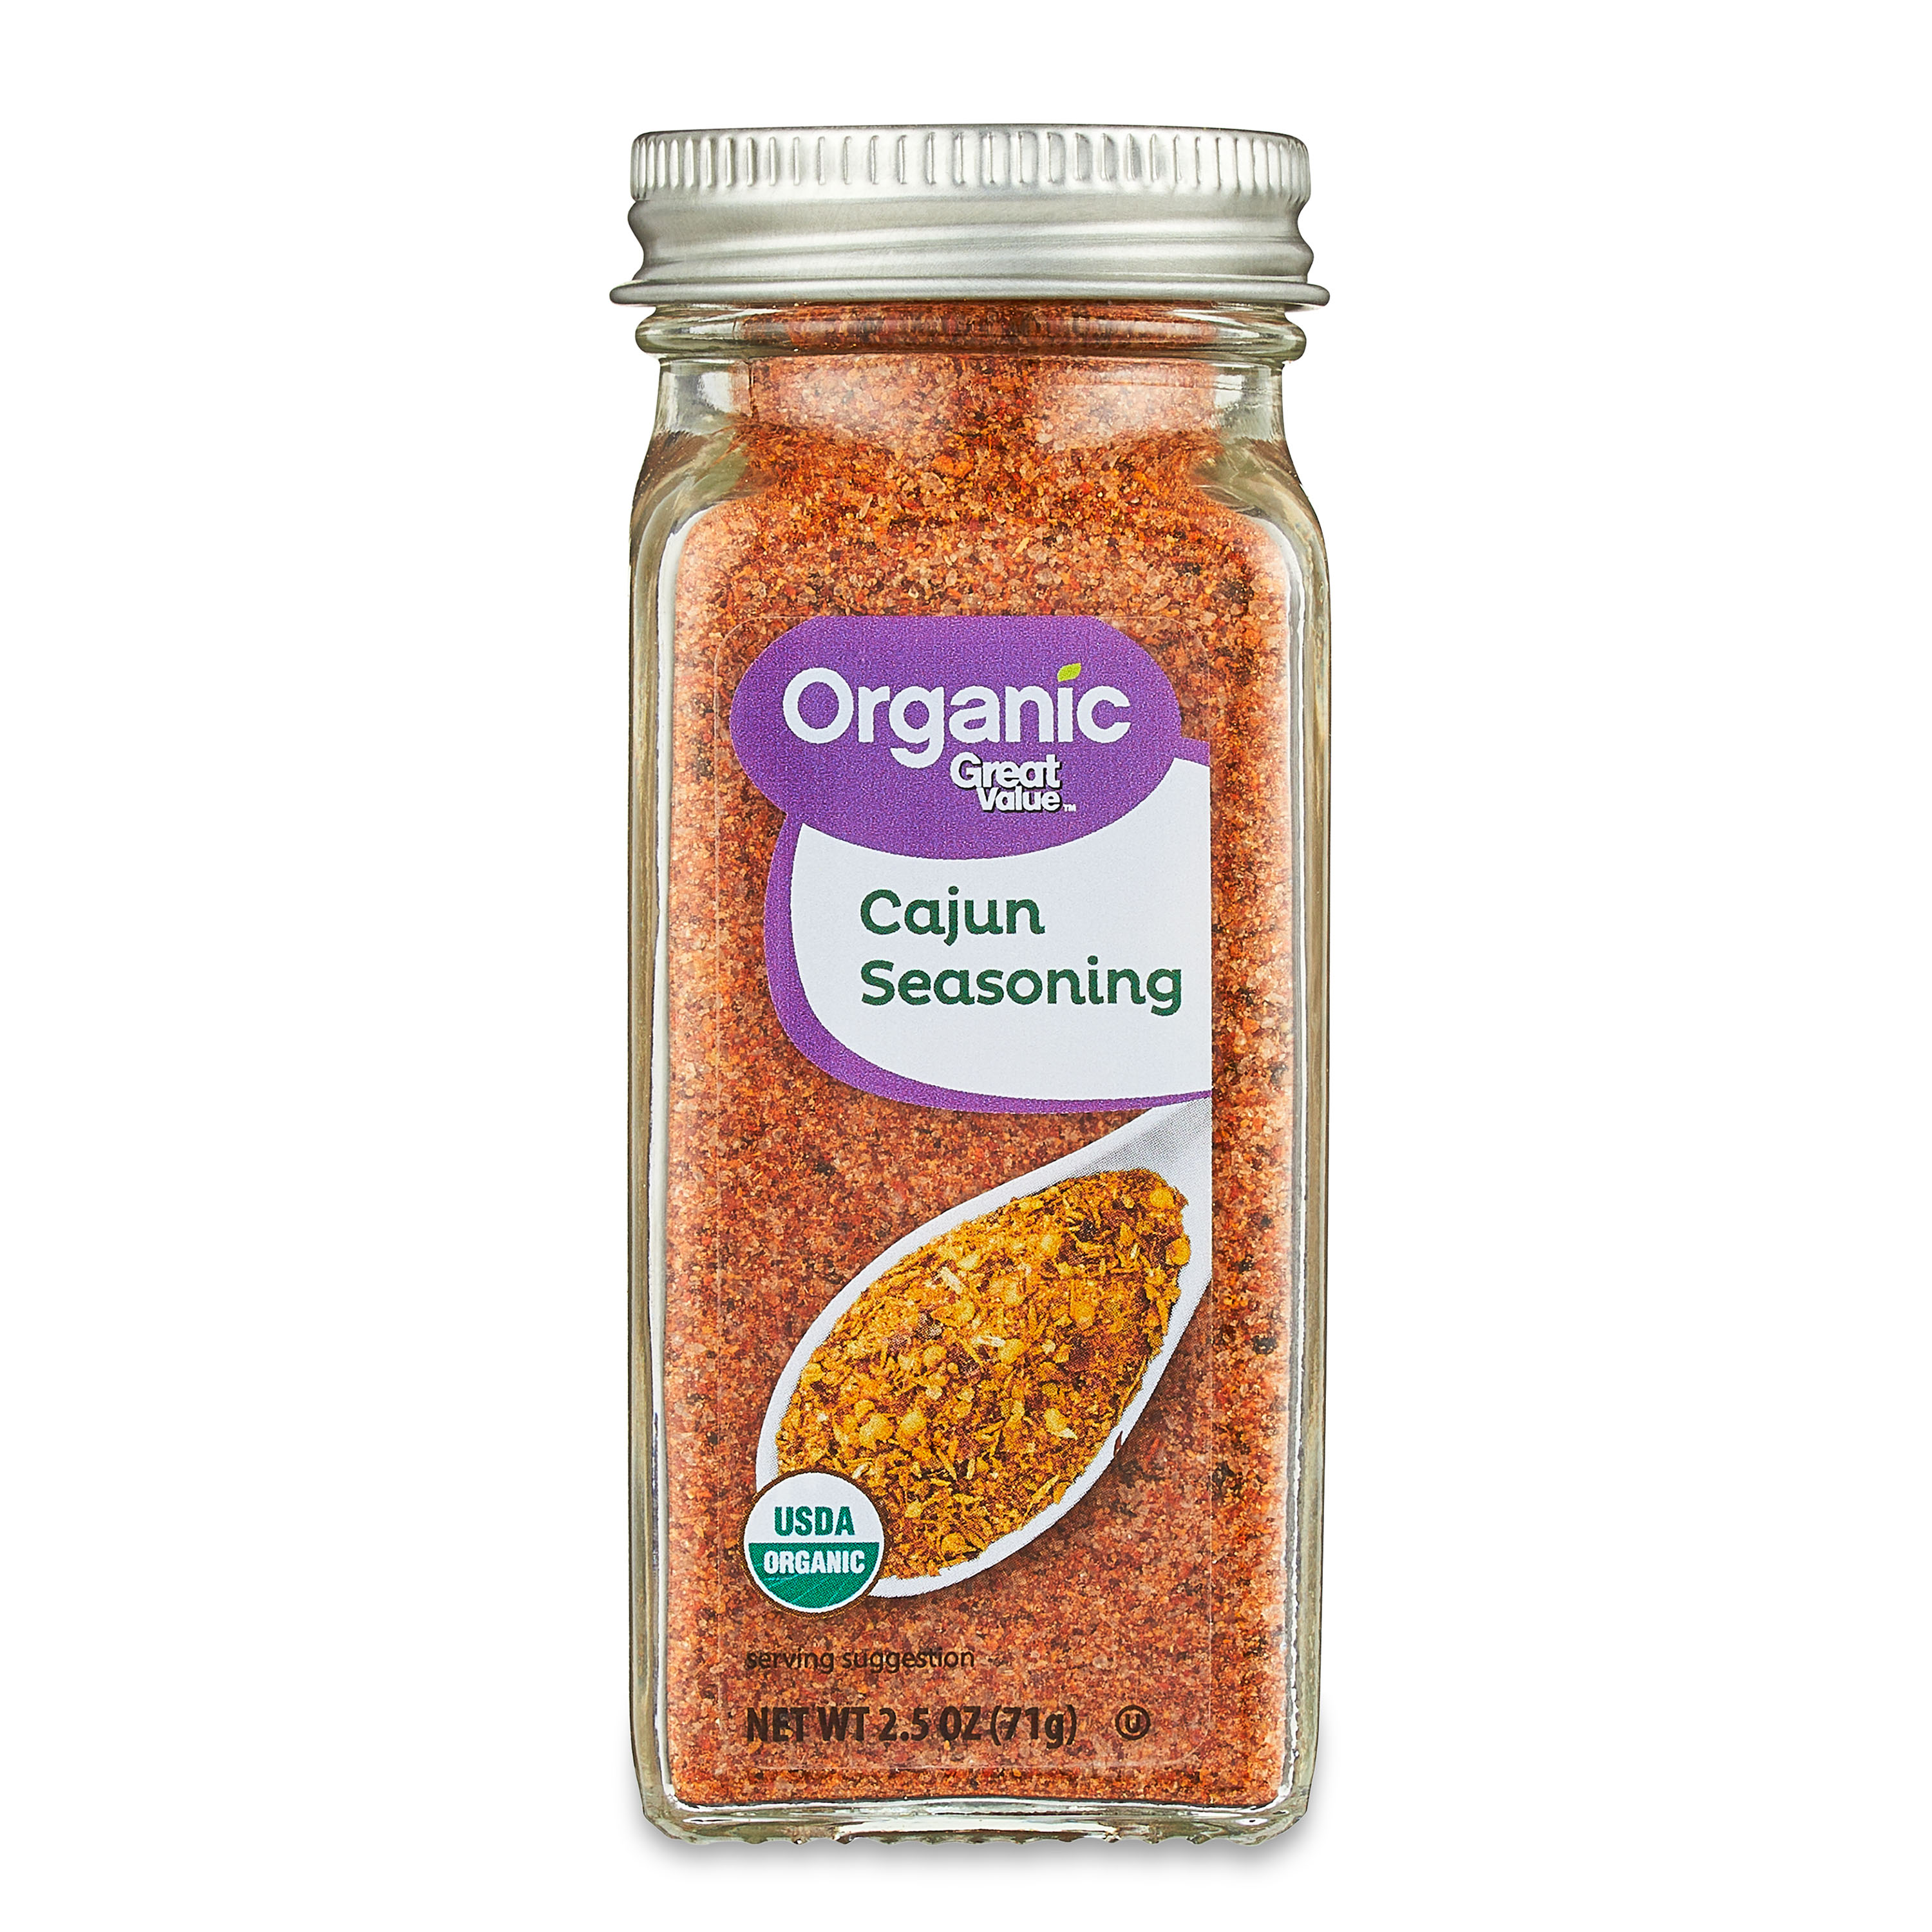 Great Value Organic Cajun Seasoning, 2.5 oz - image 1 of 7